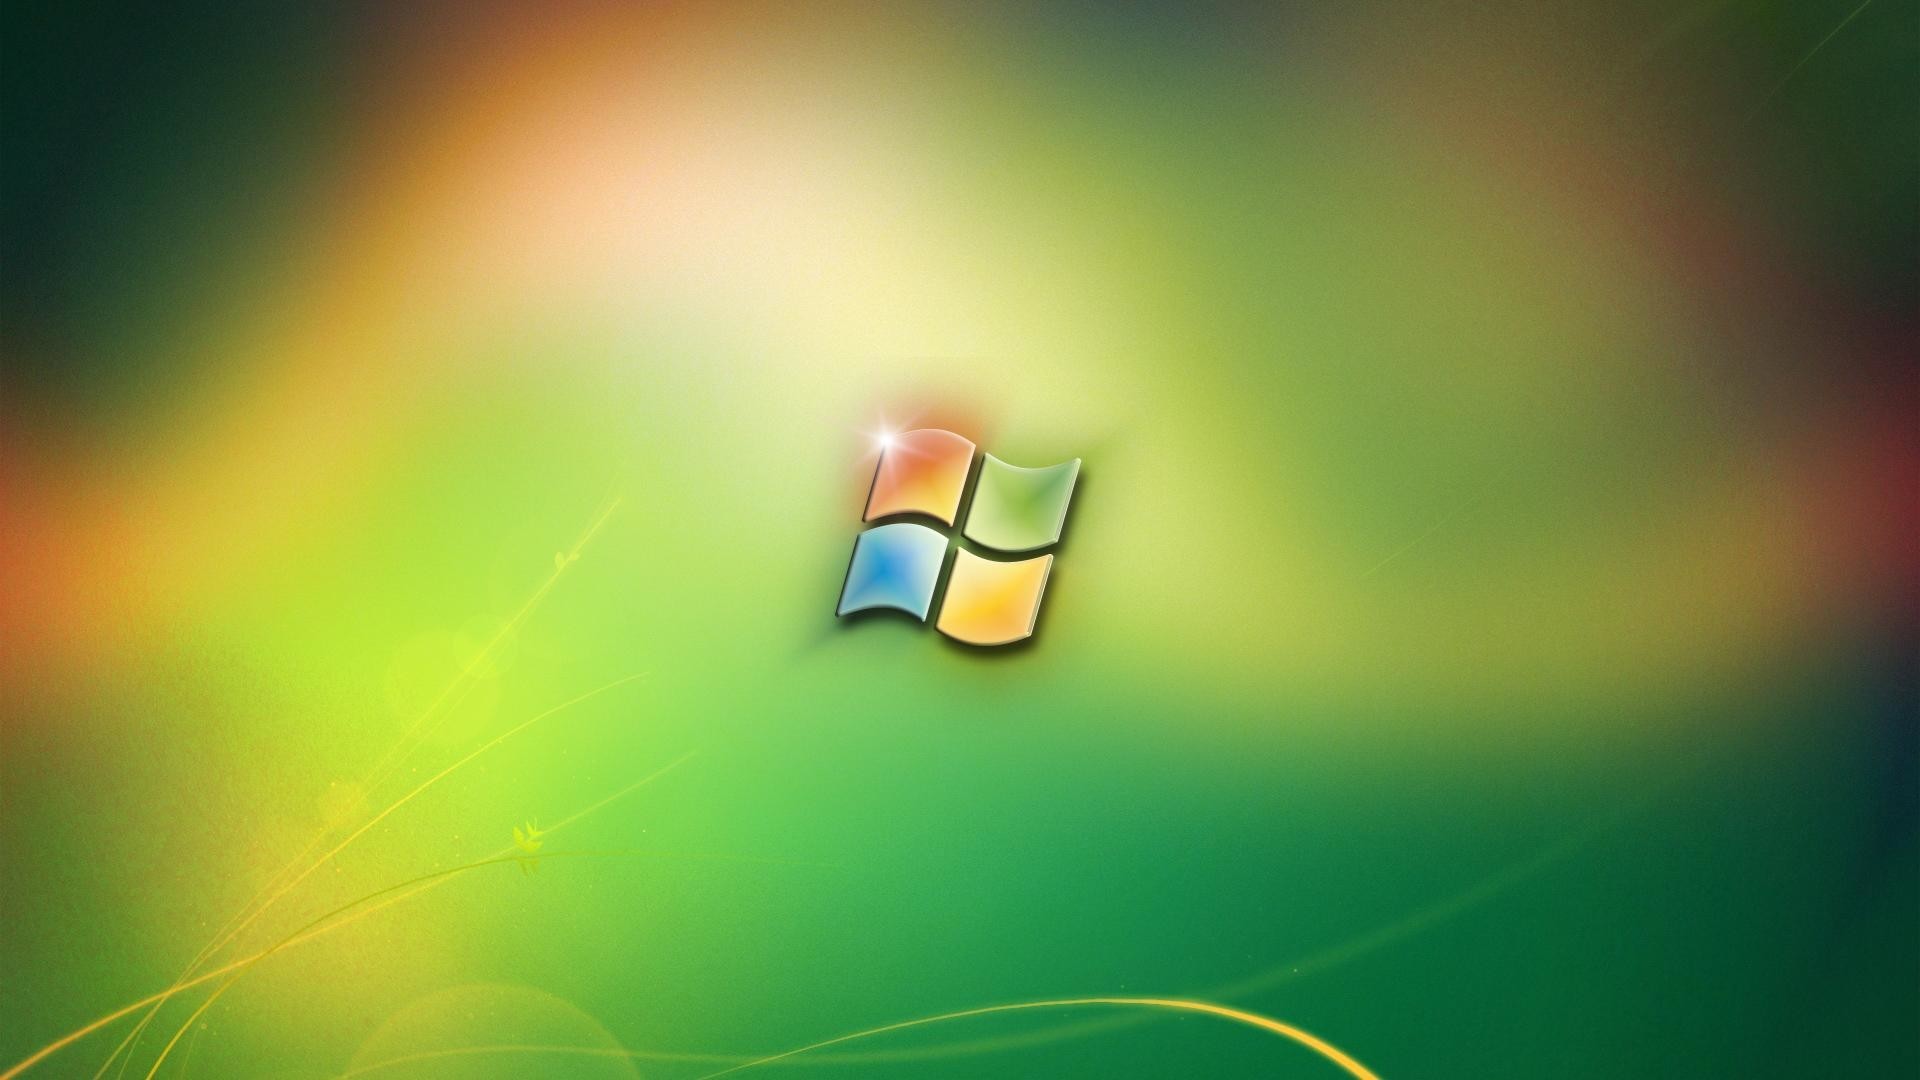 1920x1080 In Windows XP style